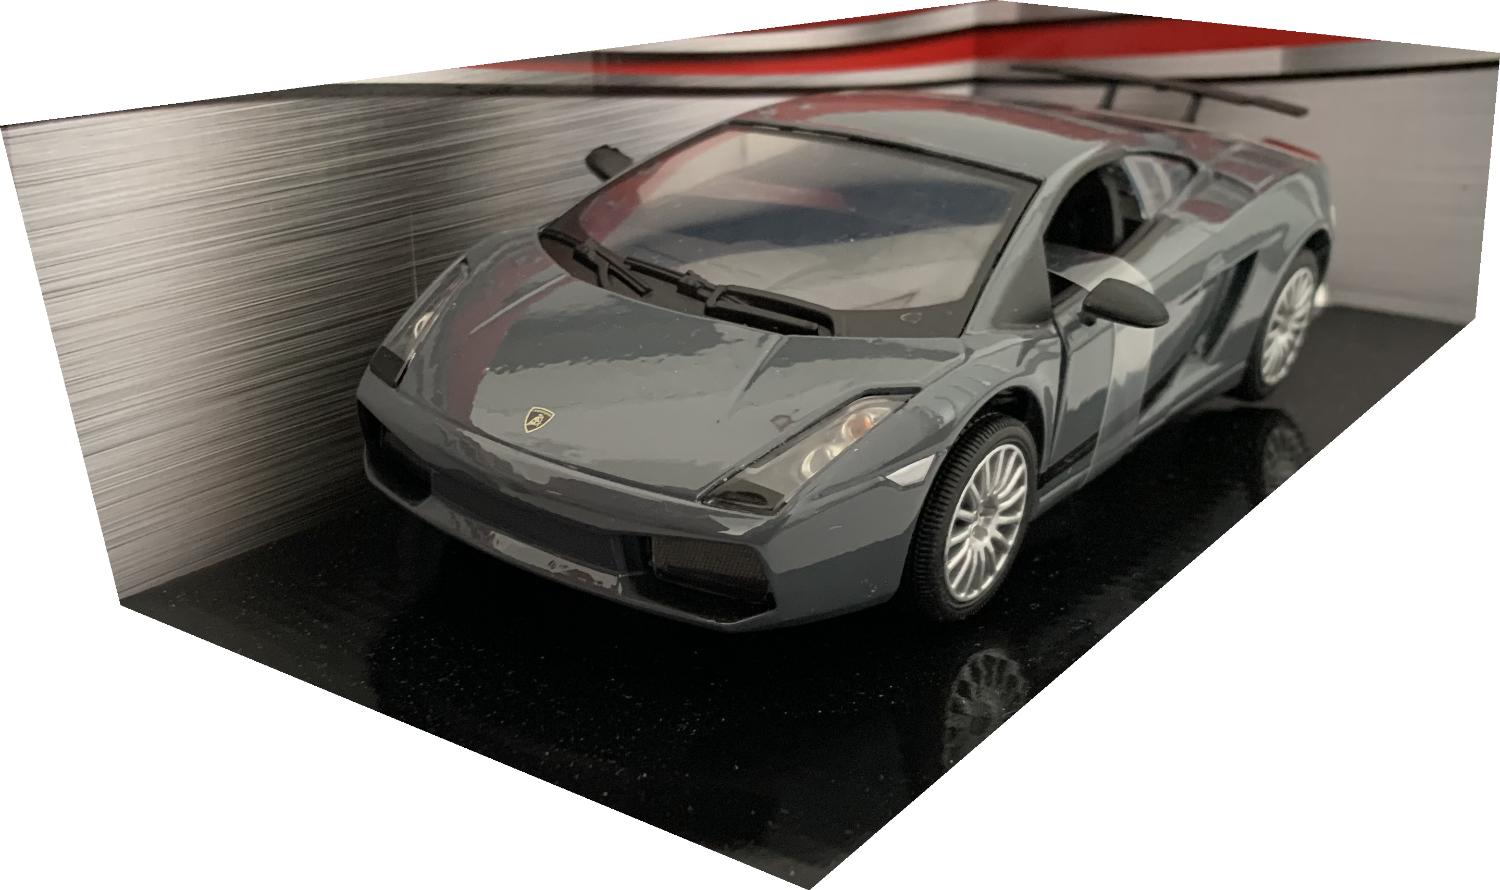 Lamborghini Gallardo Superleggera in grey 1:24 scale model from Motormax